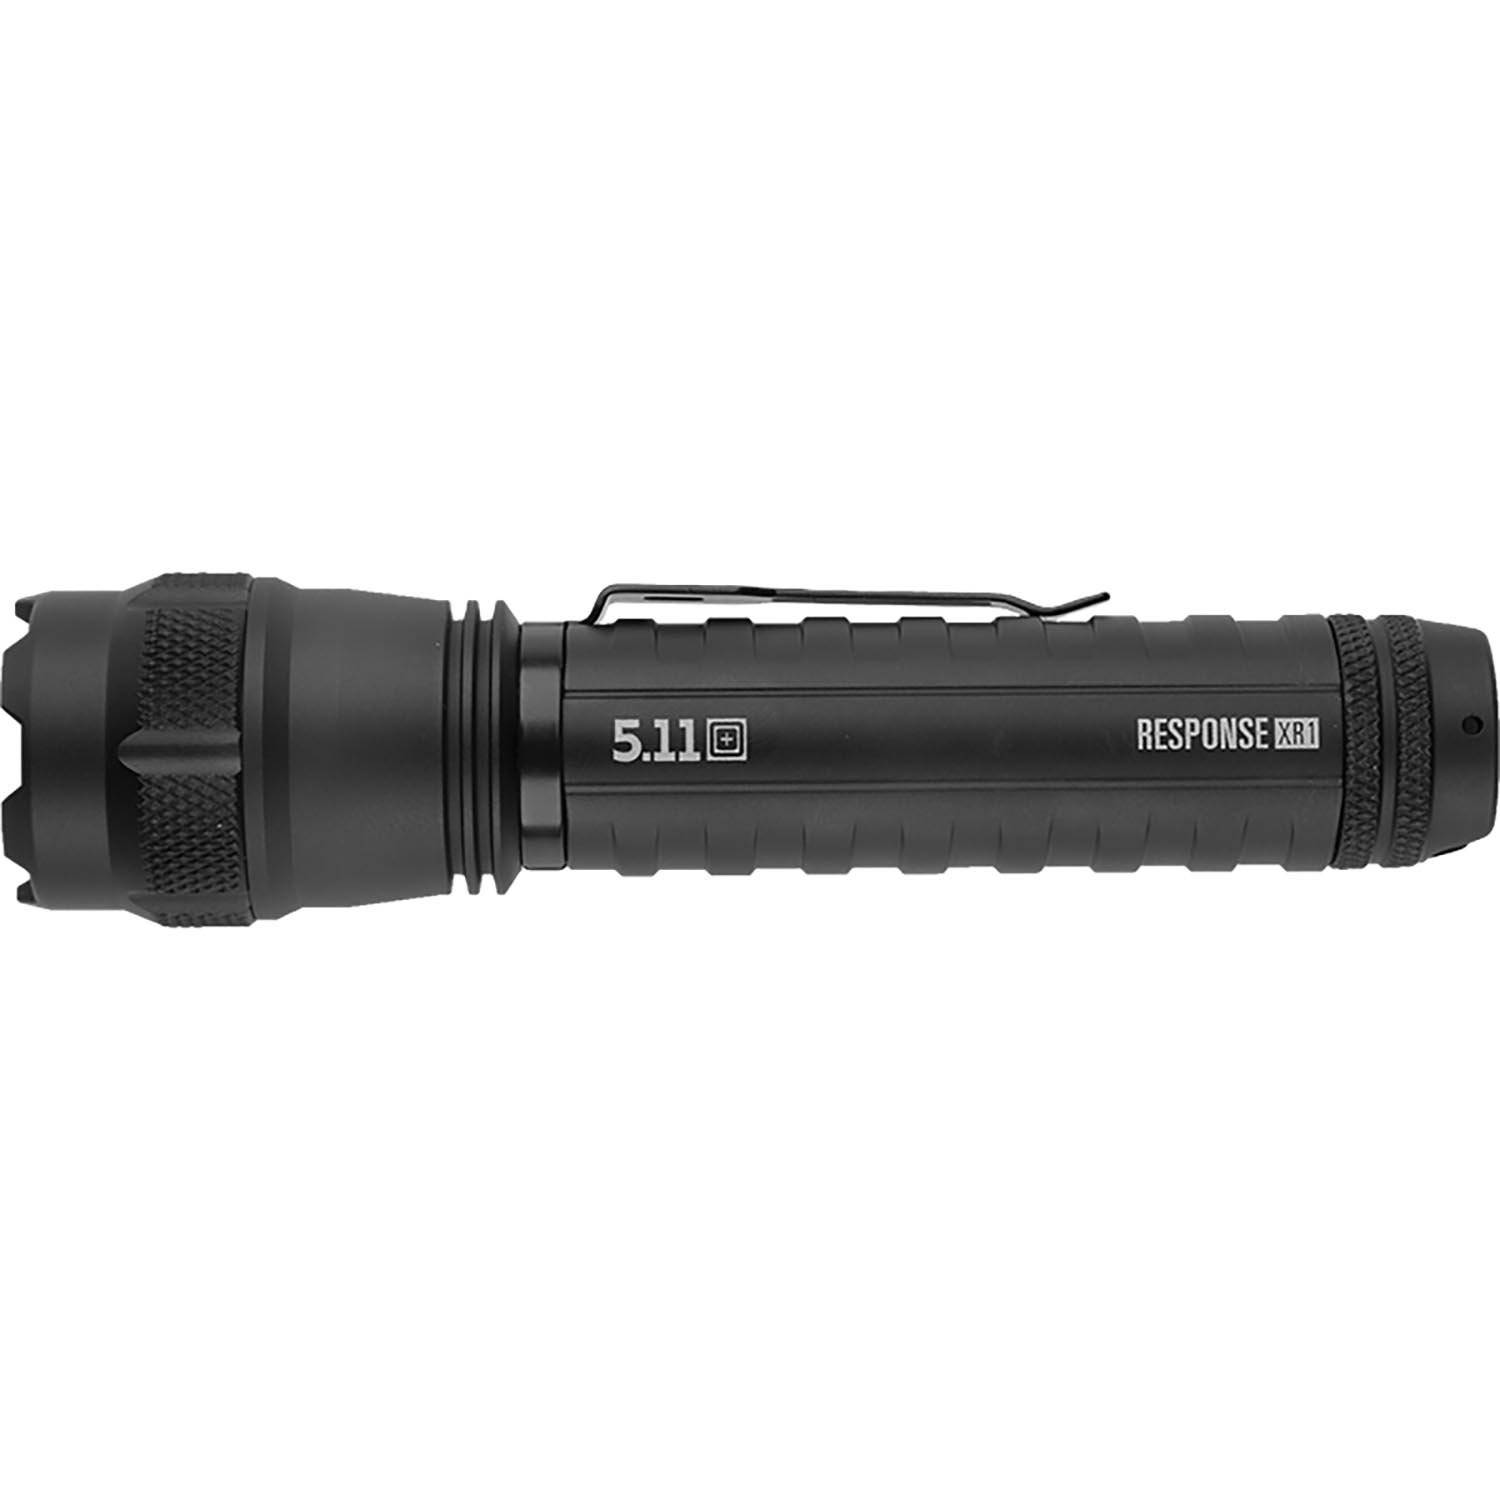 5.11 Tactical Response XR1 Flashlight